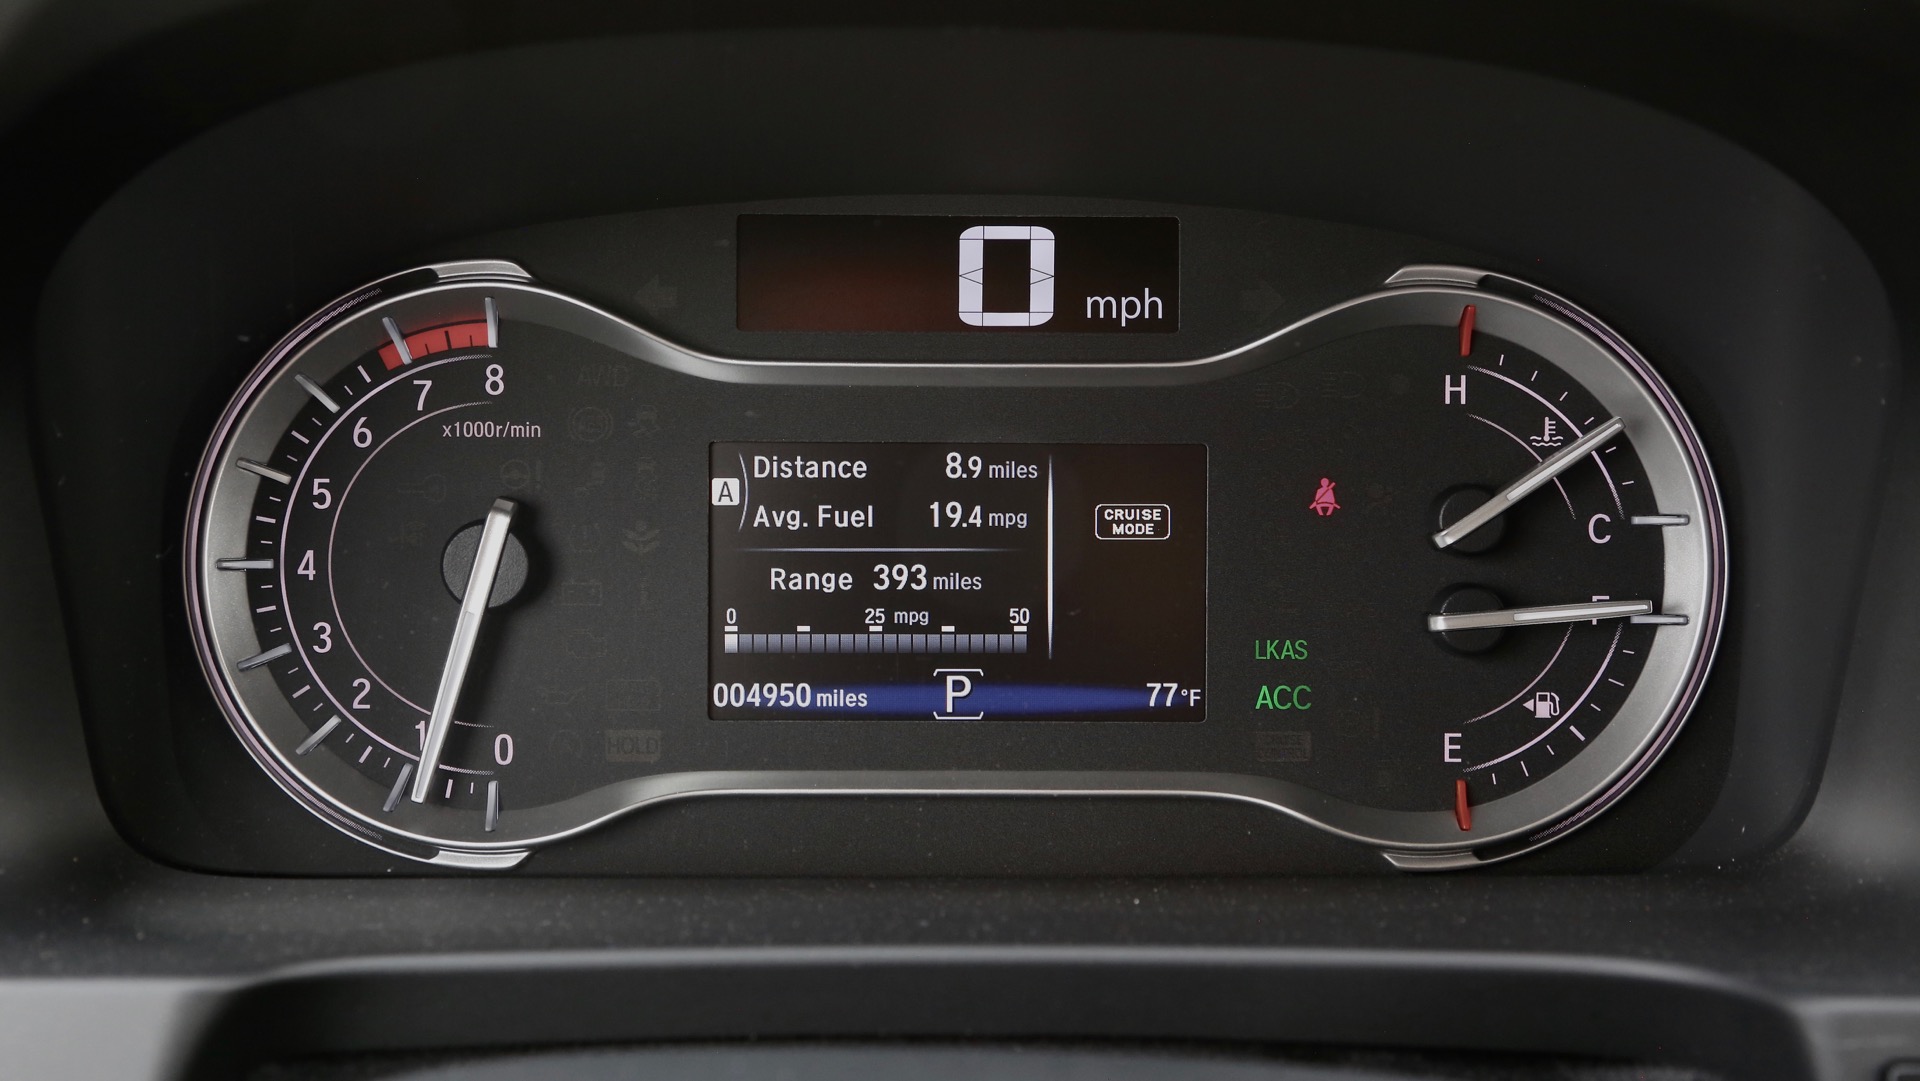 2016 Honda Pilot long-term road test: final fuel economy check-in